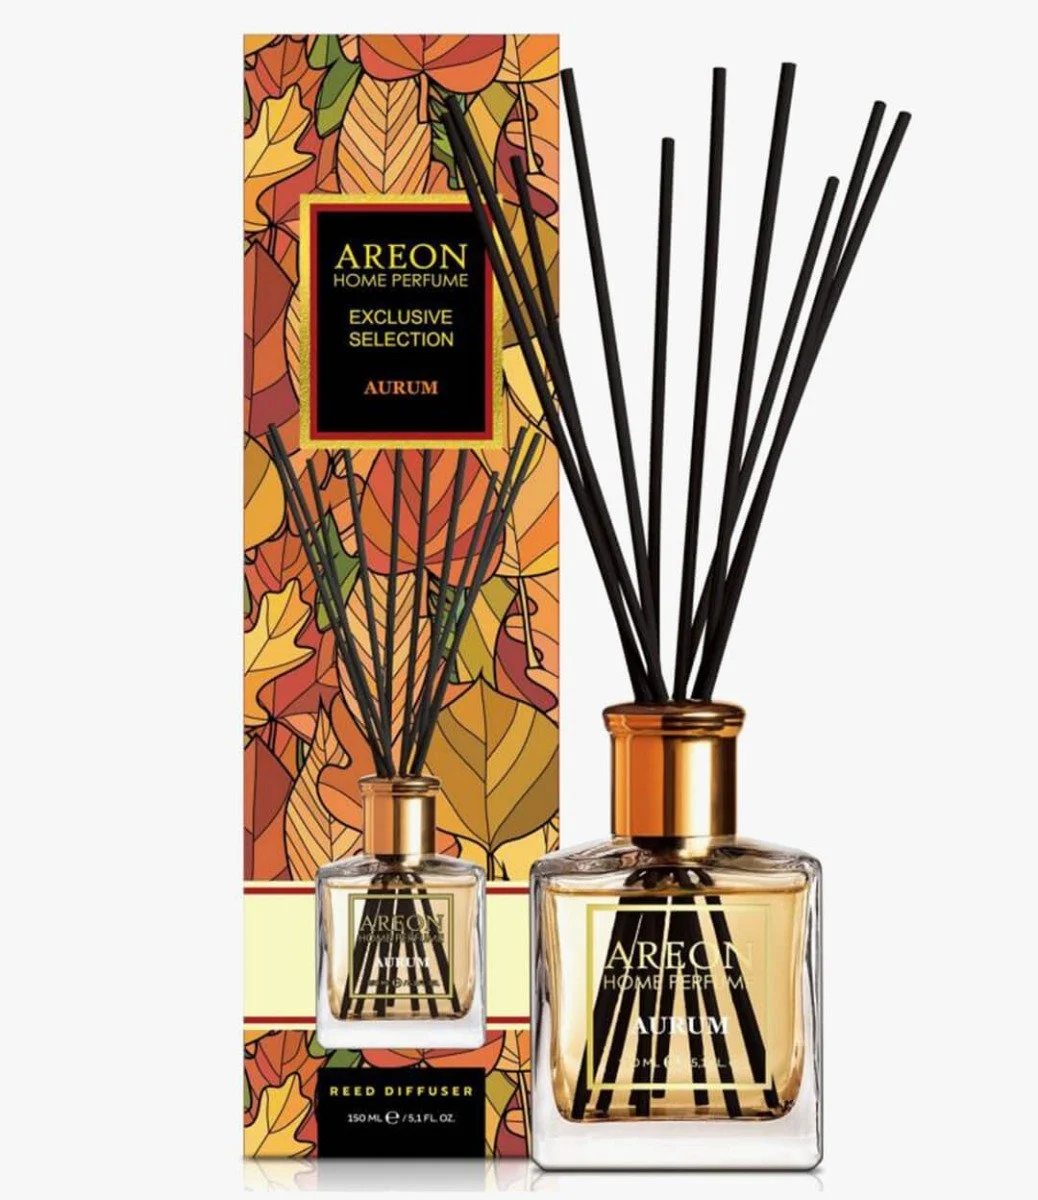 Areon Home Perfumes 150 ml Exclusive Aurum